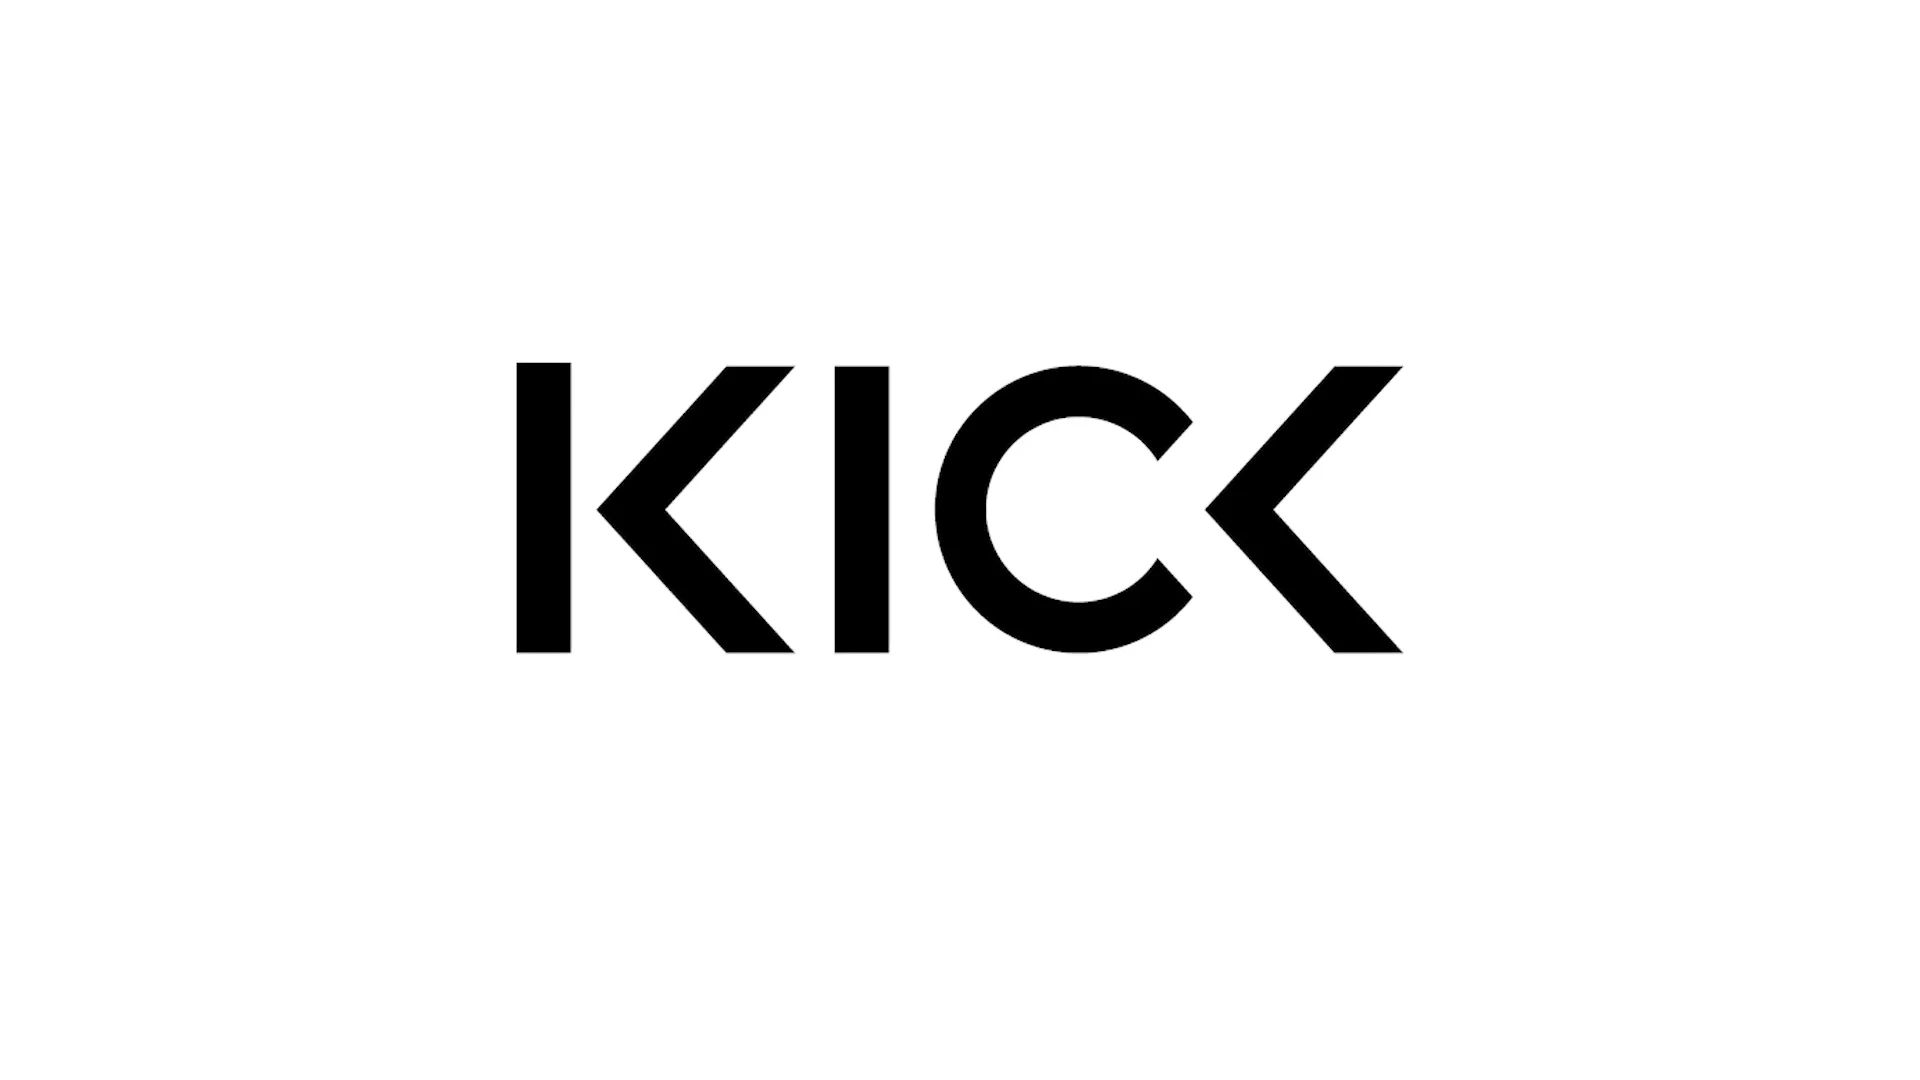 KICK Showreel 2022 on Vimeo